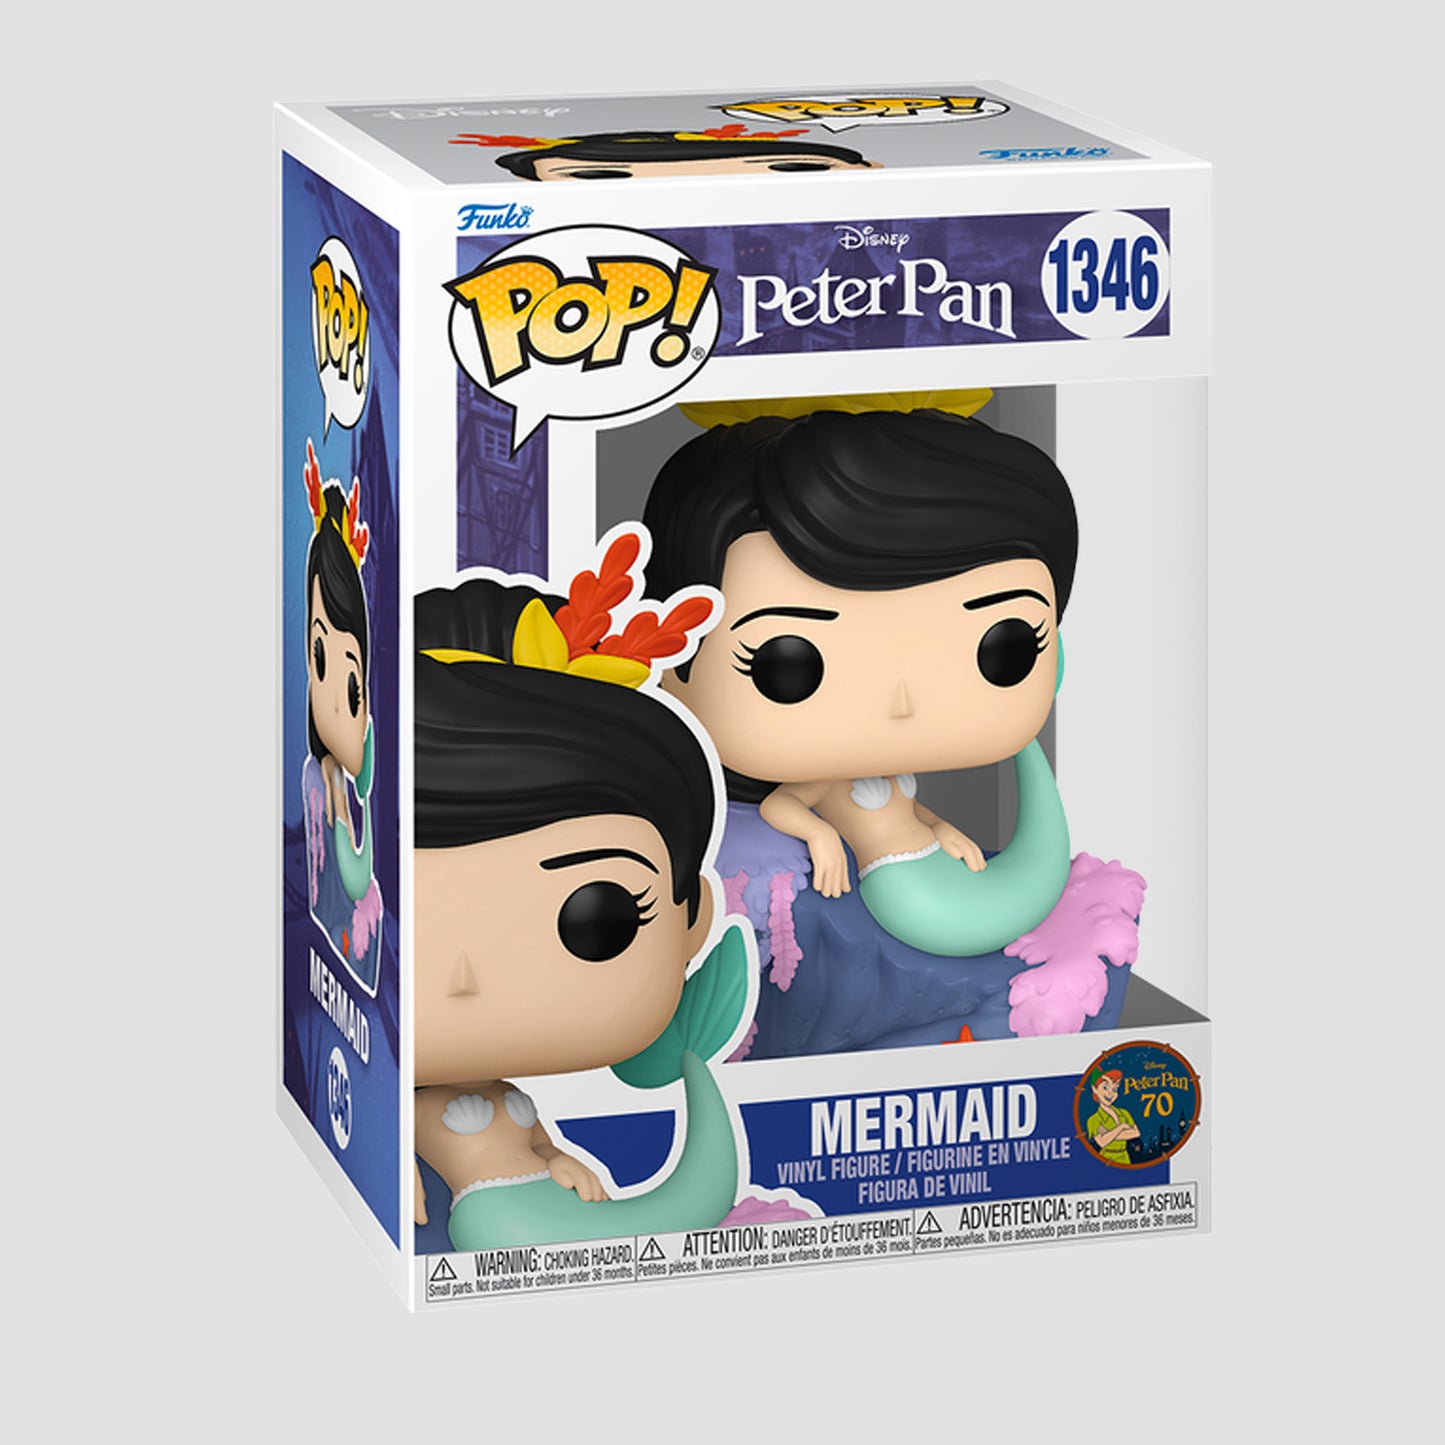 Mermaid (Peter Pan) Disney Funko Pop!